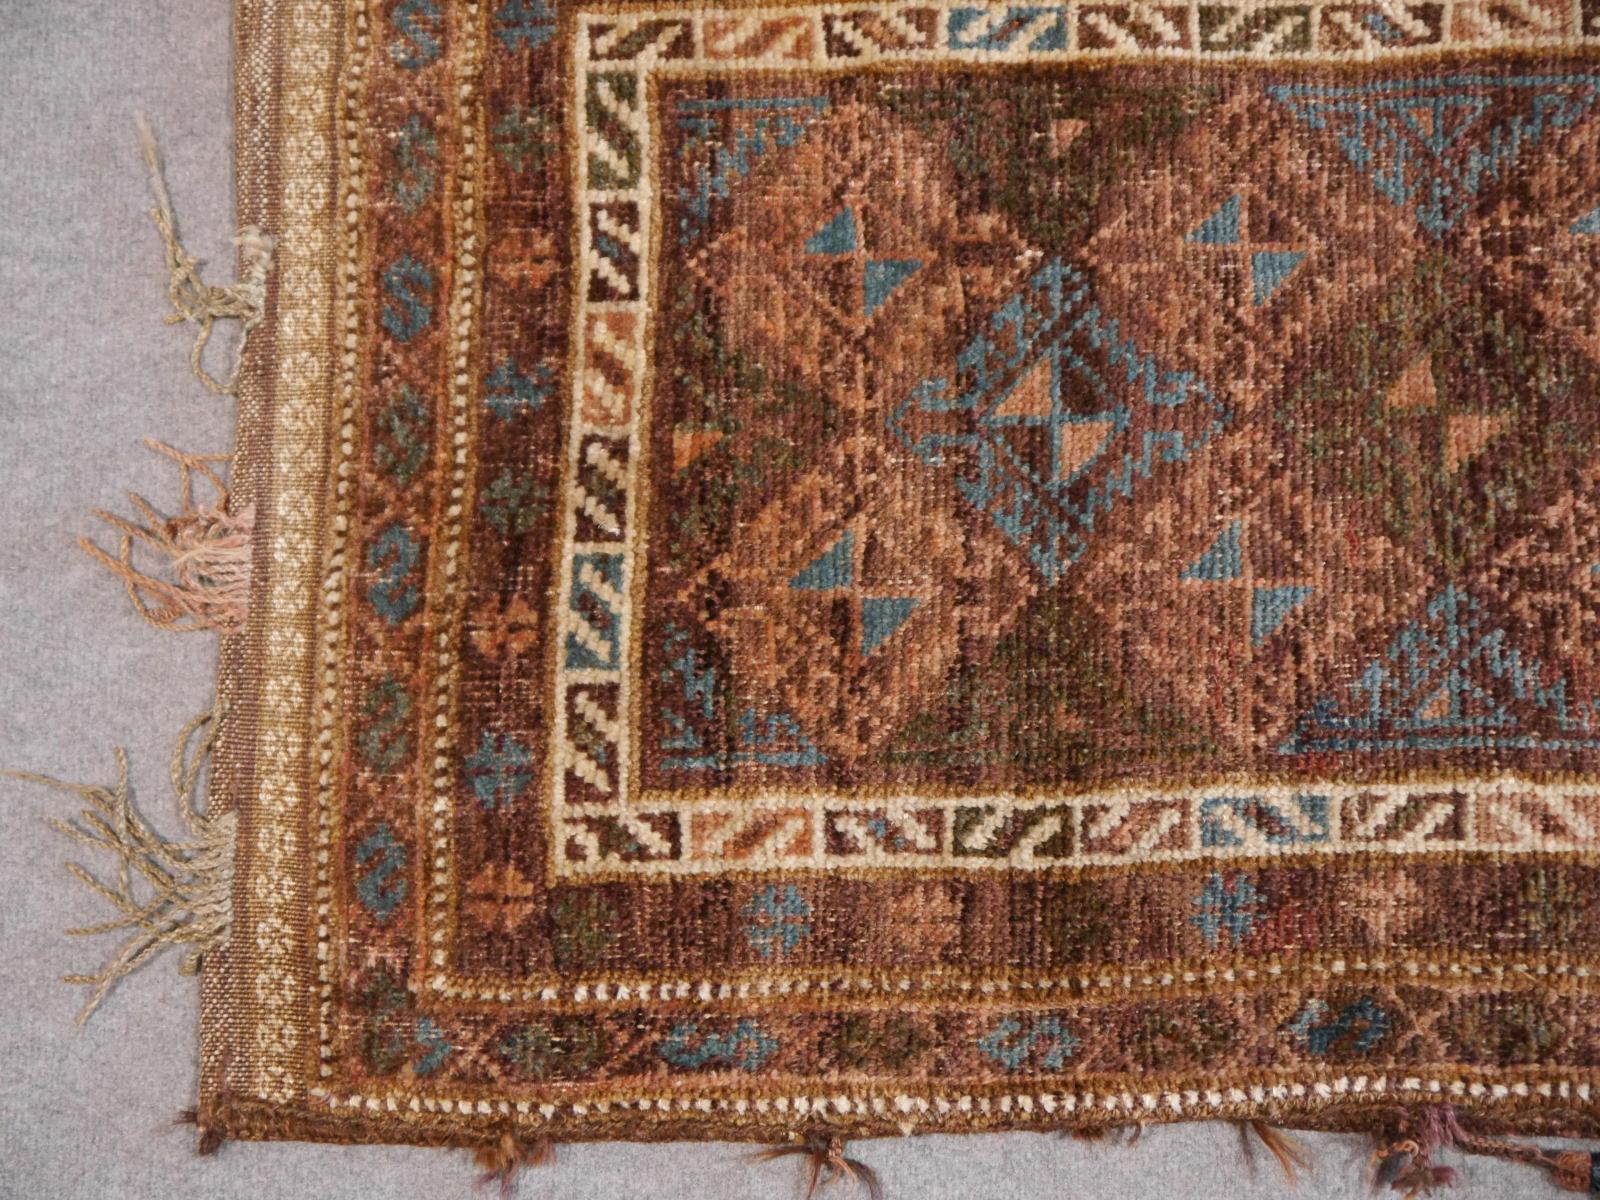 Antique Afghan Cornsack or Tribal Bag 2